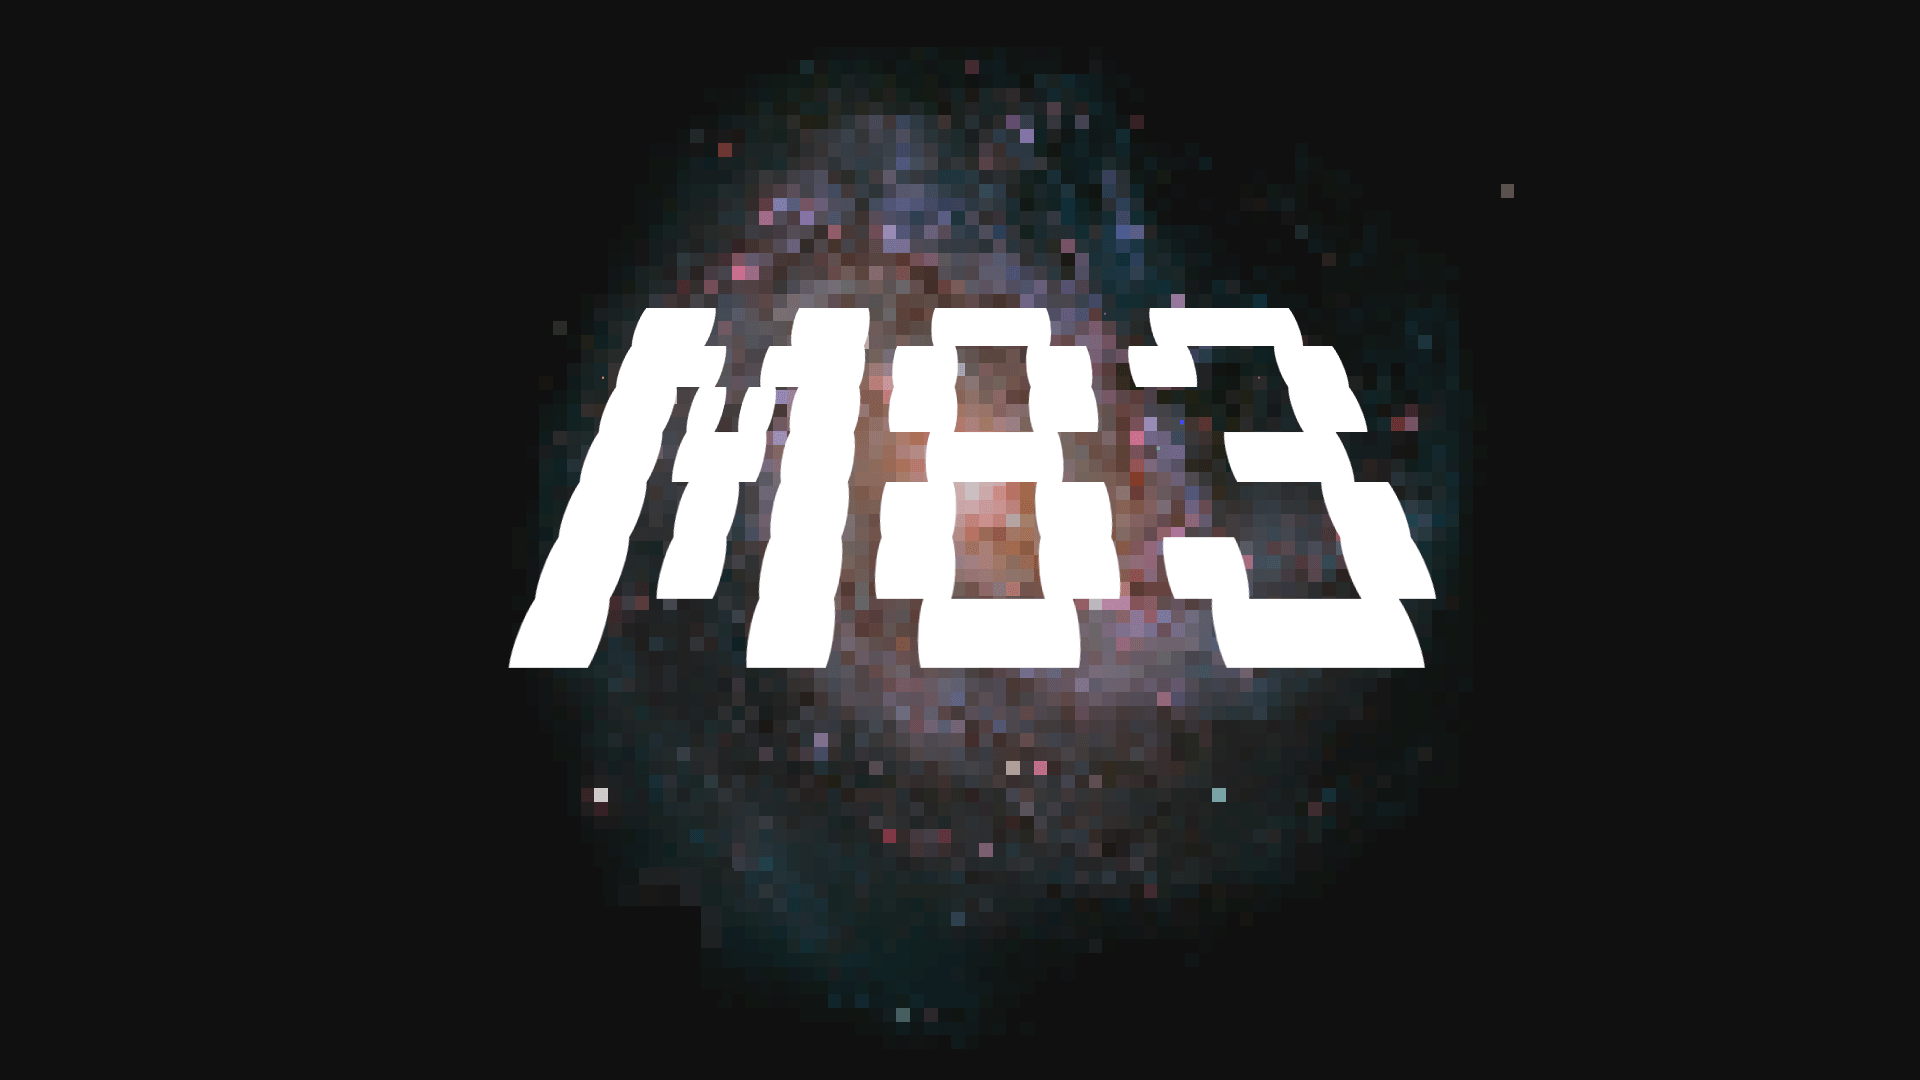 M83 Logo - M83